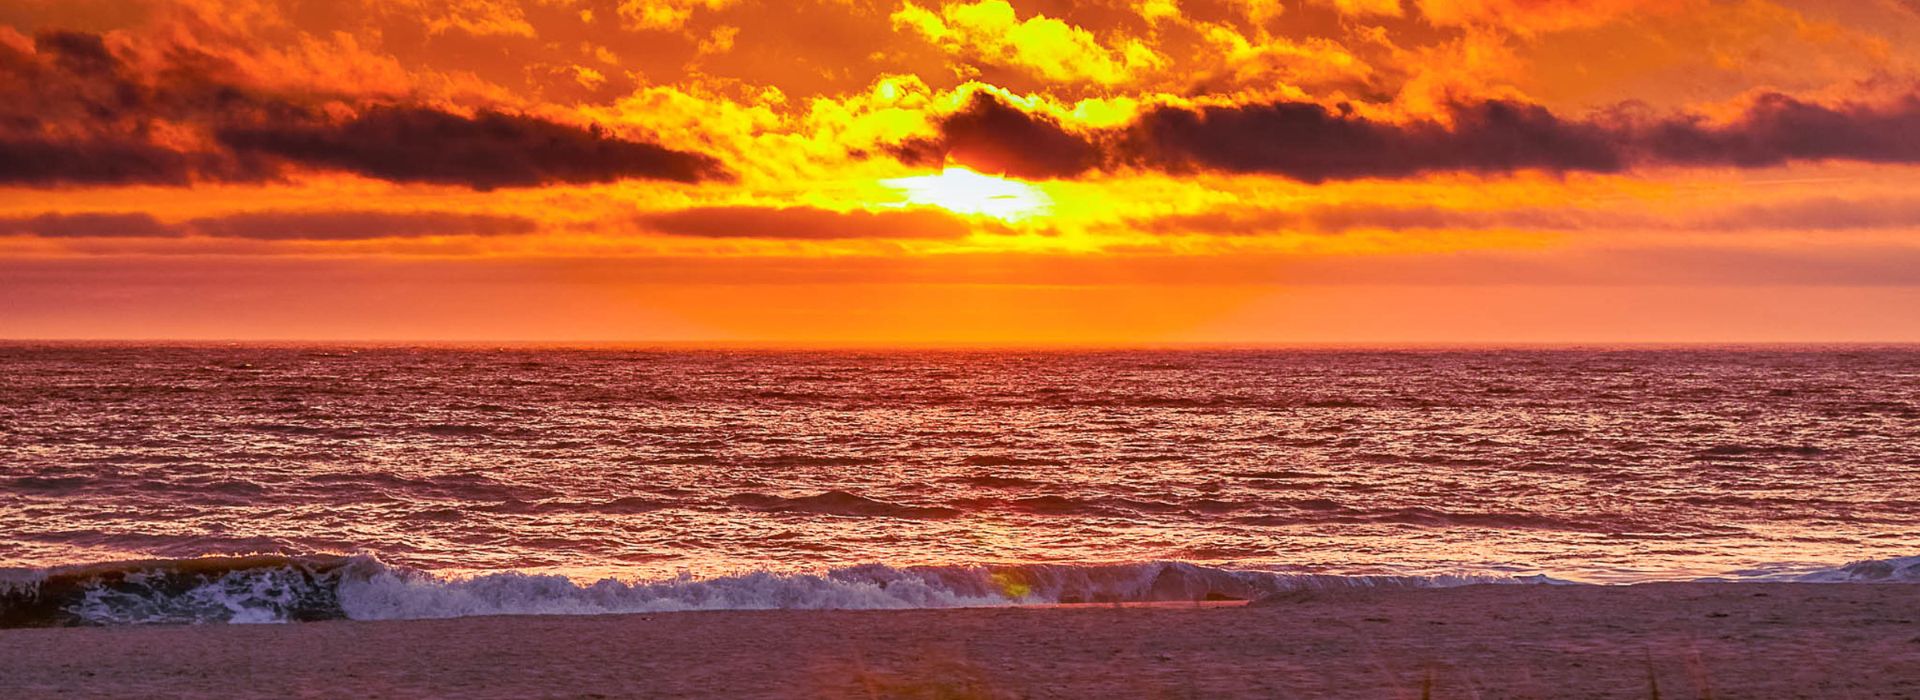 Rich orange sunset over the Atlantic ocean at Rehoboth Beach.